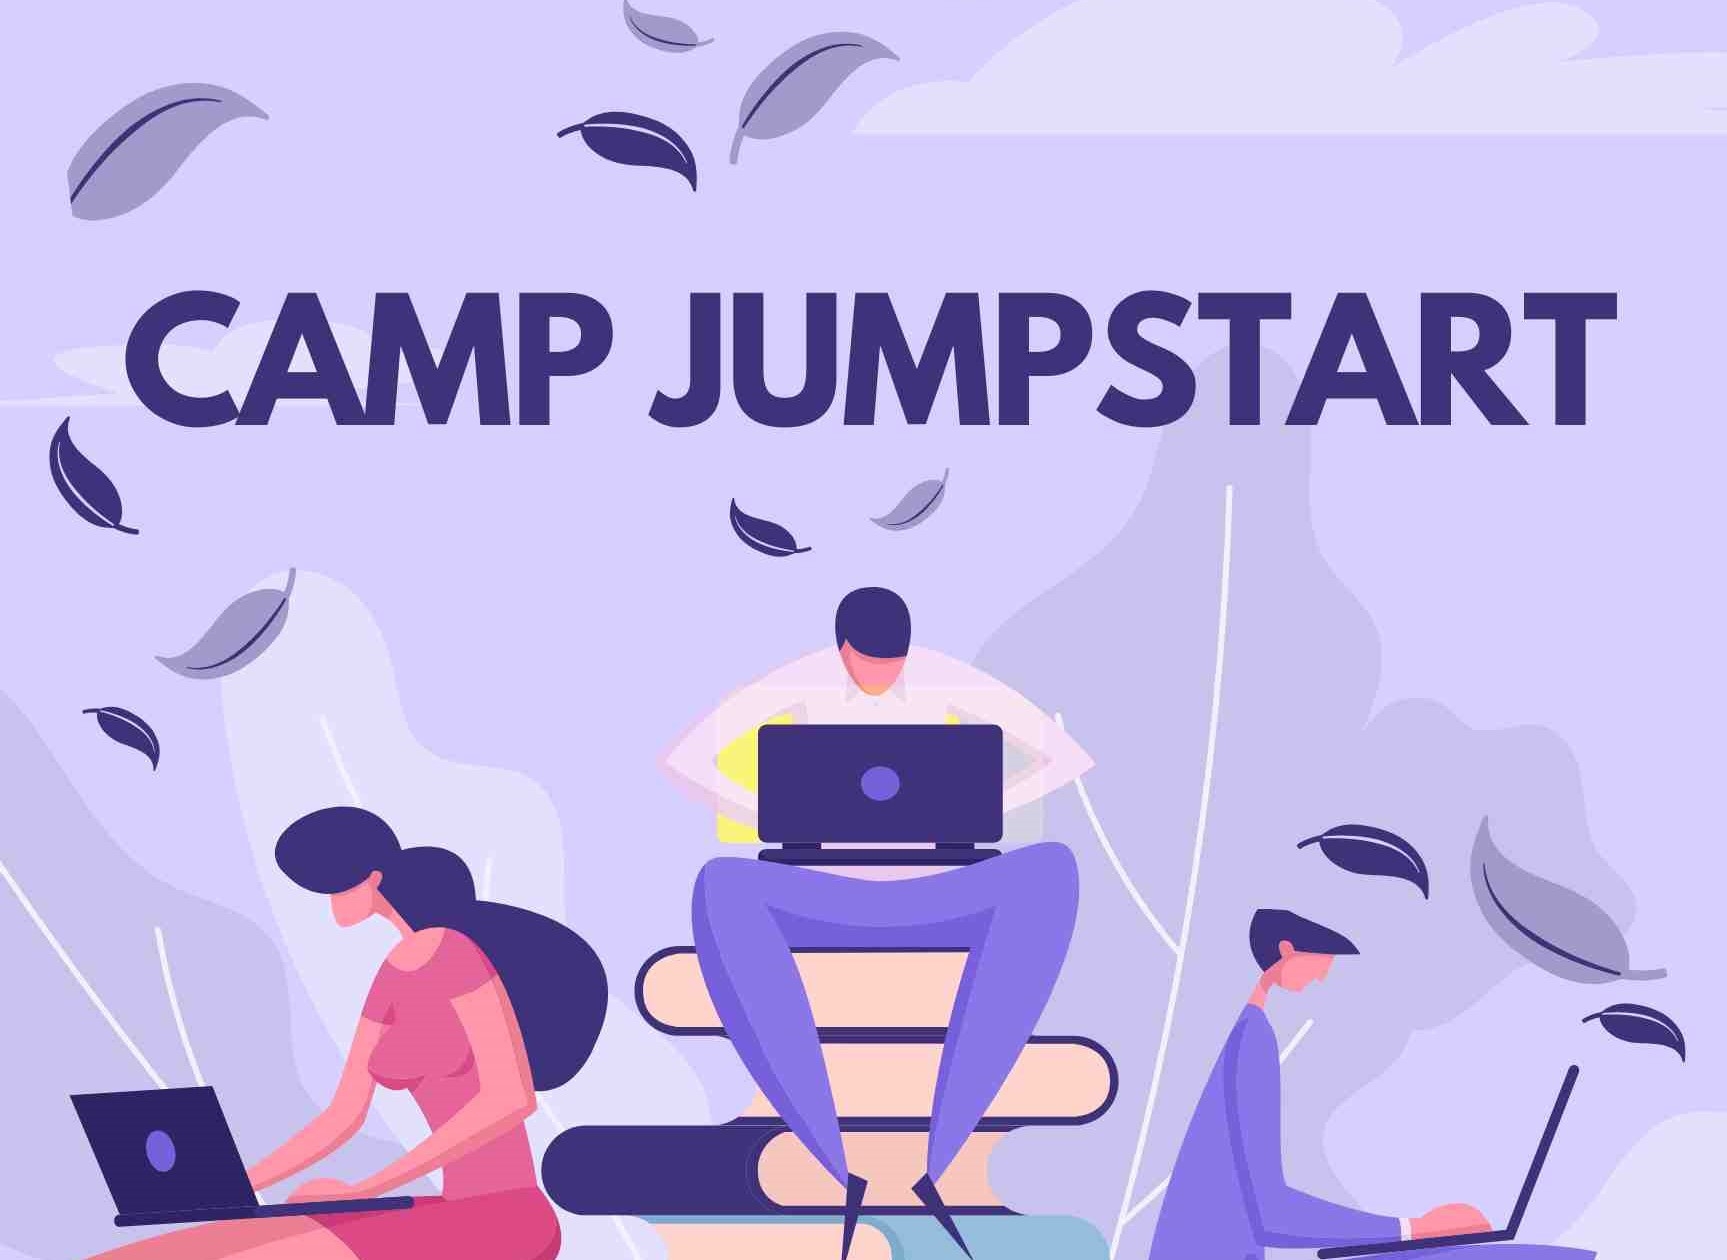 Camp Jumpstart